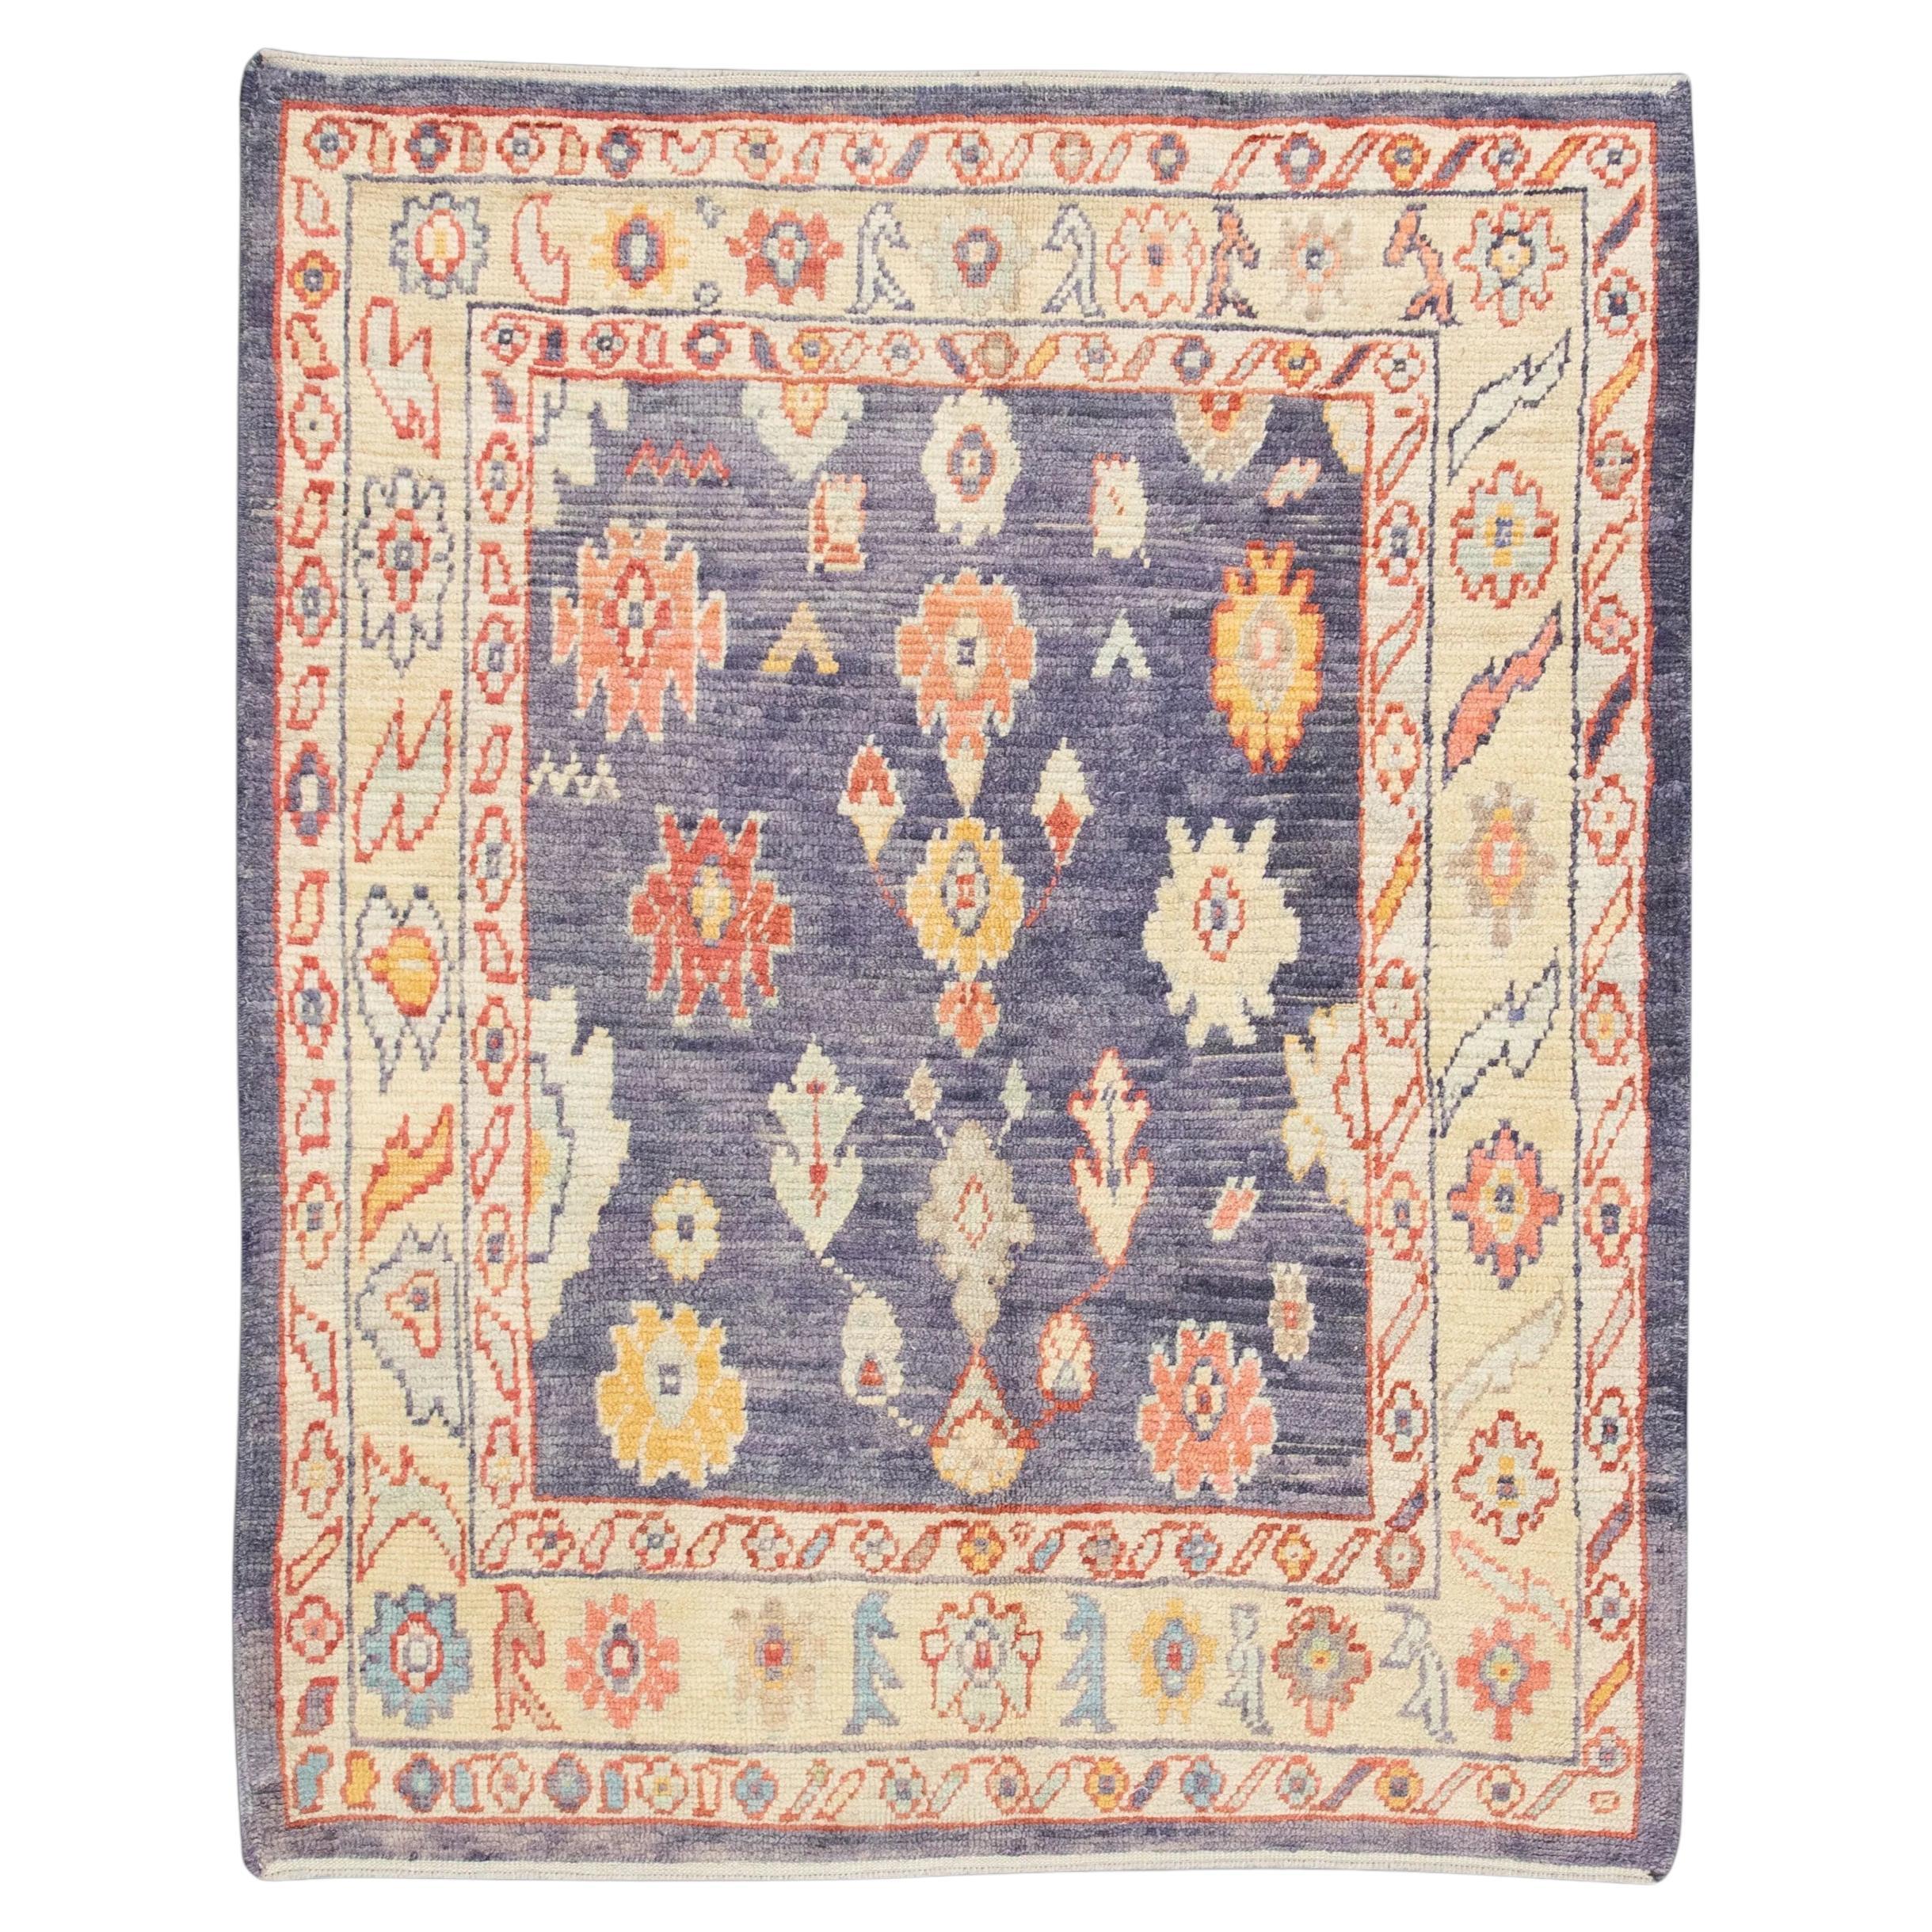 Handwoven Wool  Carpet Turkish Oushak Rug 5'4" x 6'9" #4602 For Sale